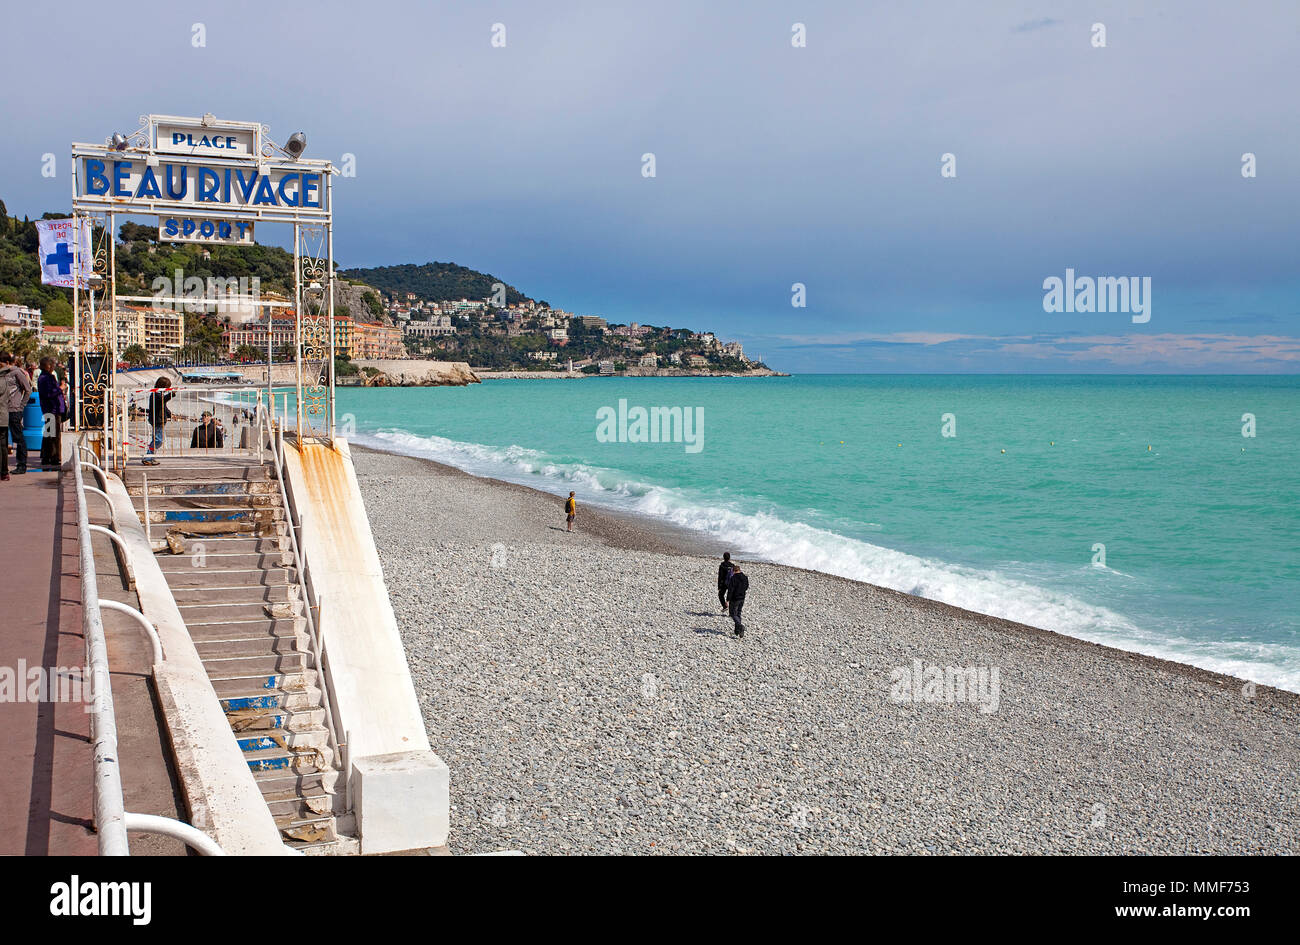 Treppe in Beau Rivage, Bar und Restaurant an der Promenade des Anglais, Boulevard, Nizza, Côte d'Azur, Alpes Maritimes, Südfrankreich, Frankreich, Europa Stockfoto